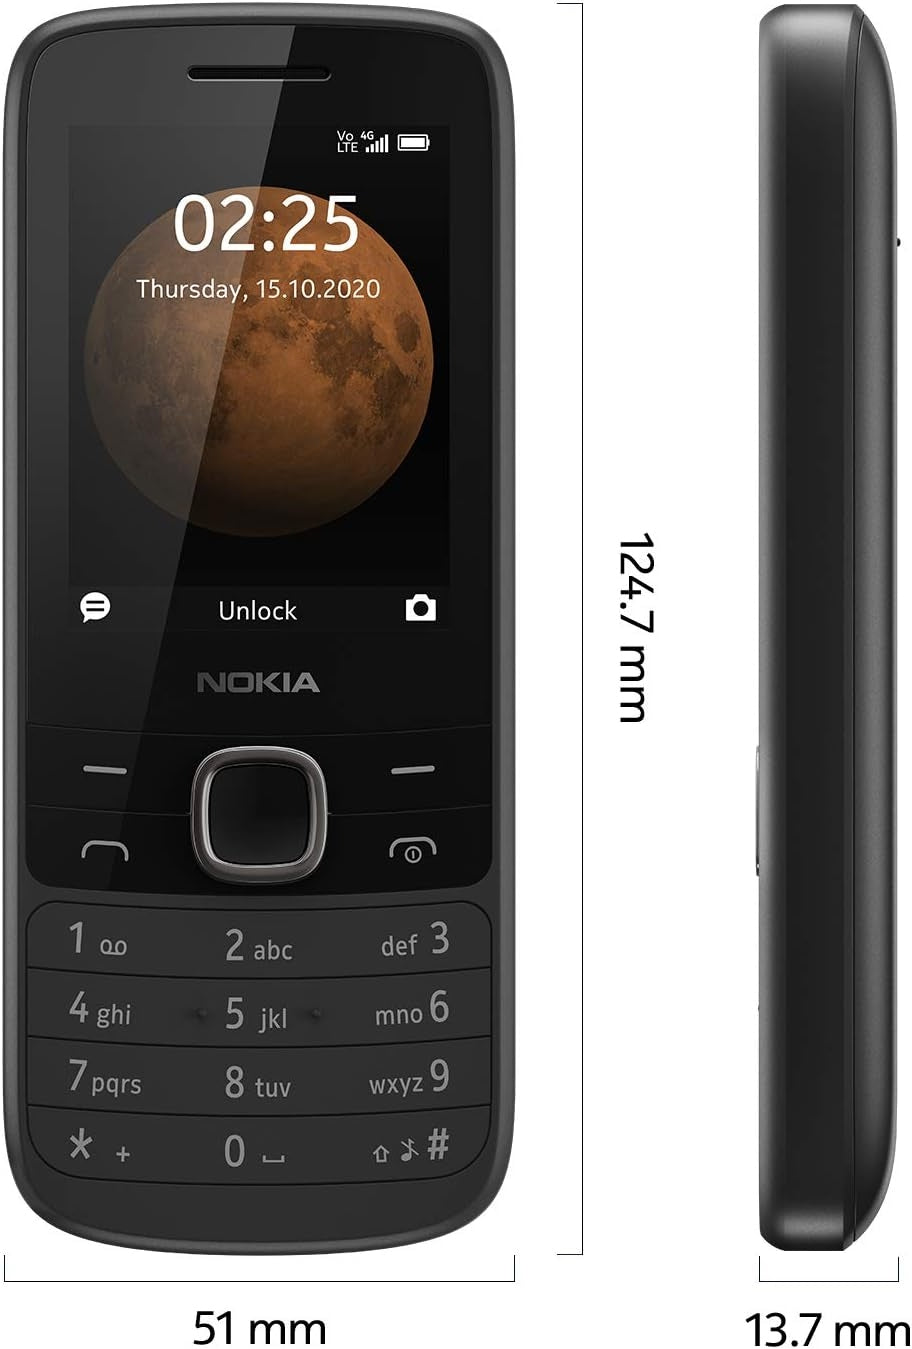 Nokia 225 Feature Phone, 4G, Dual SIM, 64MB RAM-Black